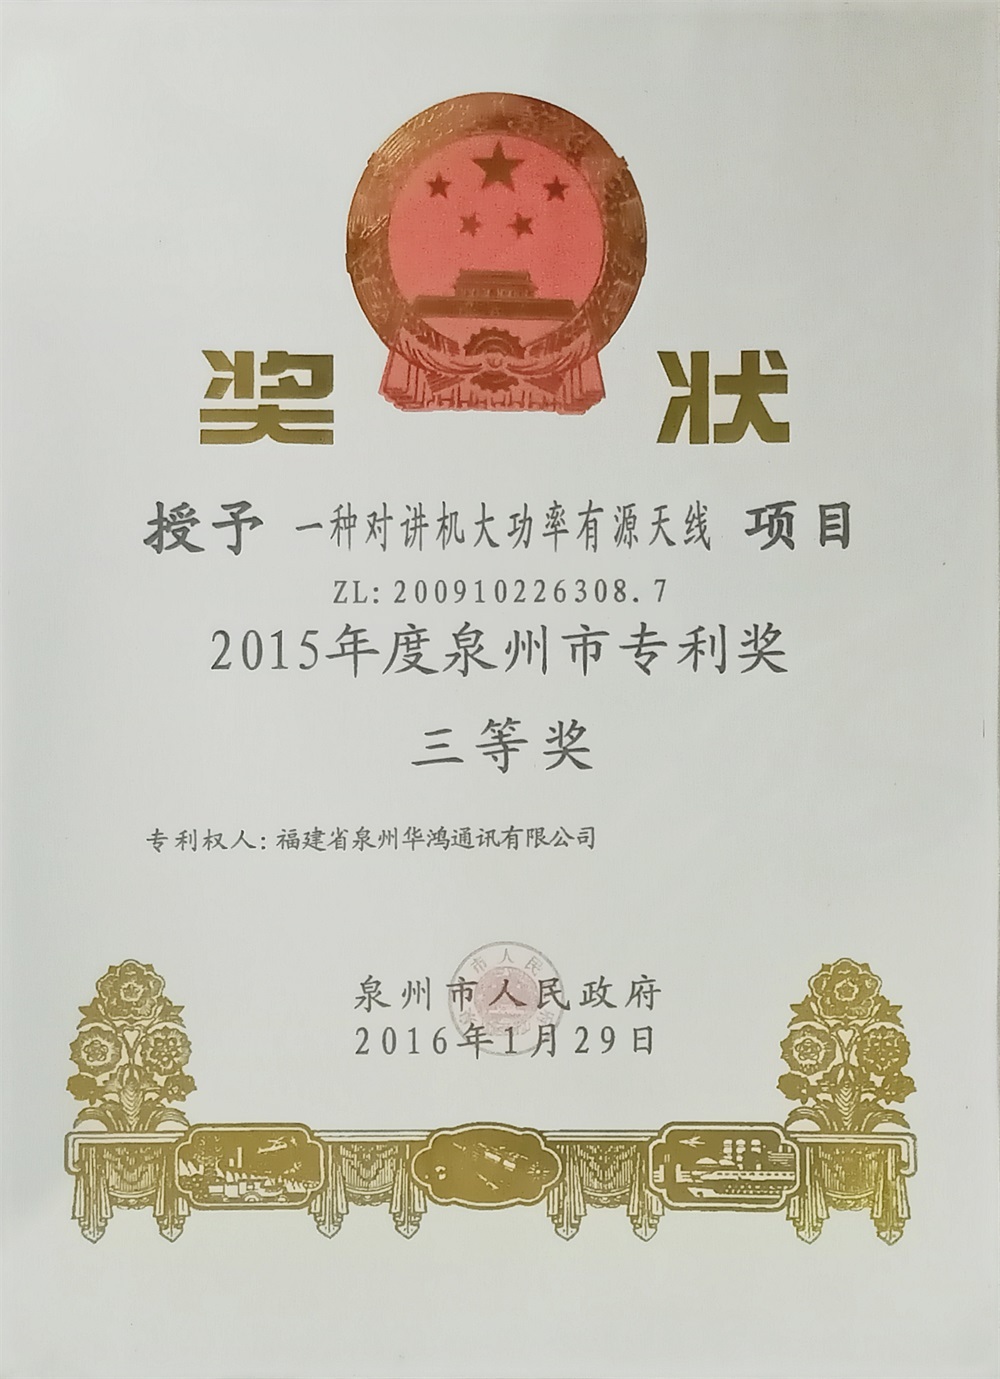 Third Prize of Quanzhou Patent Award 2015